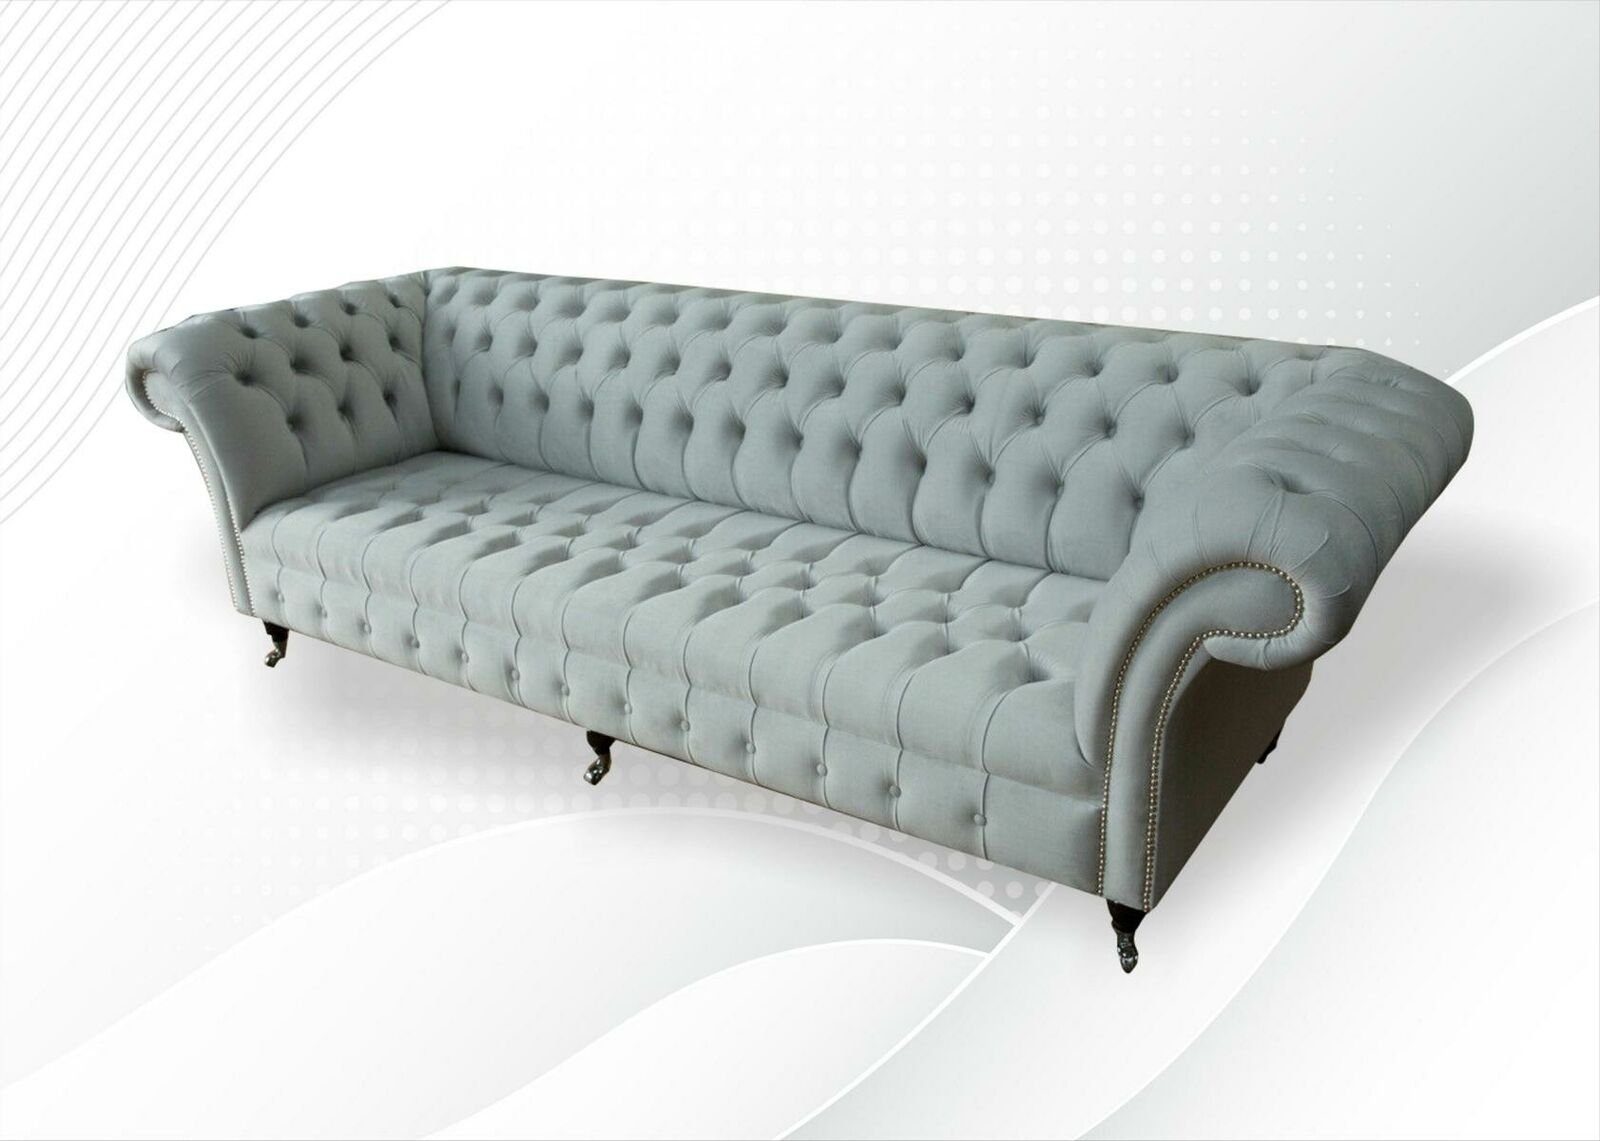 Chesterfield-Sofa Made Chesterfield JVmoebel Moderne Luxus Hellblau Neu, Möbel Europe in Viersitzer